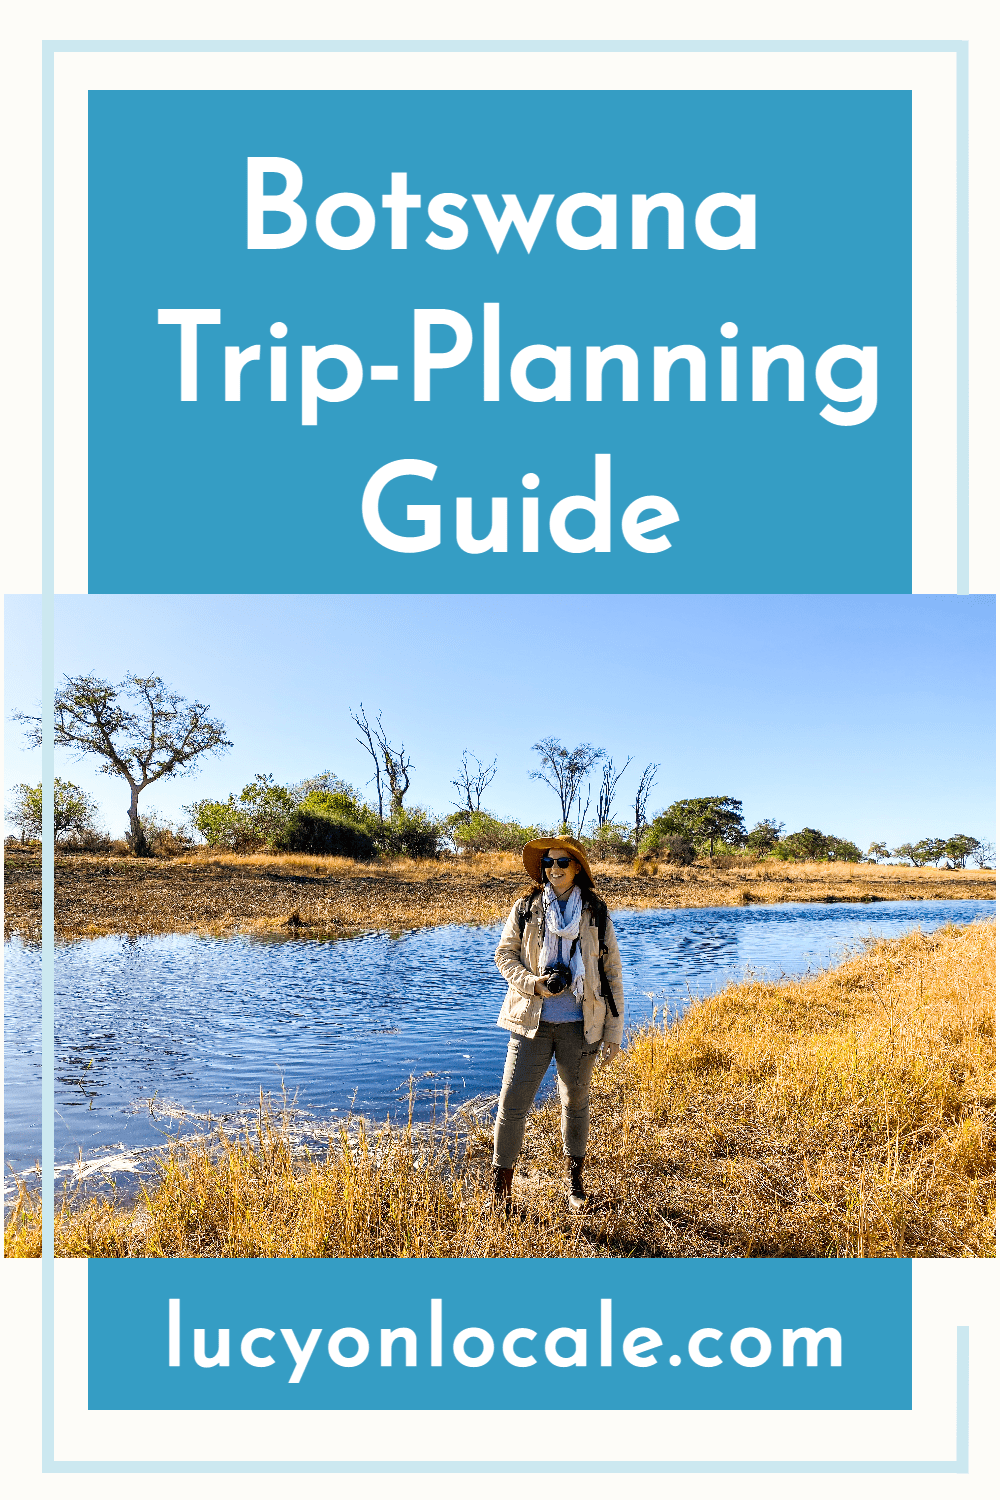 Botswana trip-planning guide